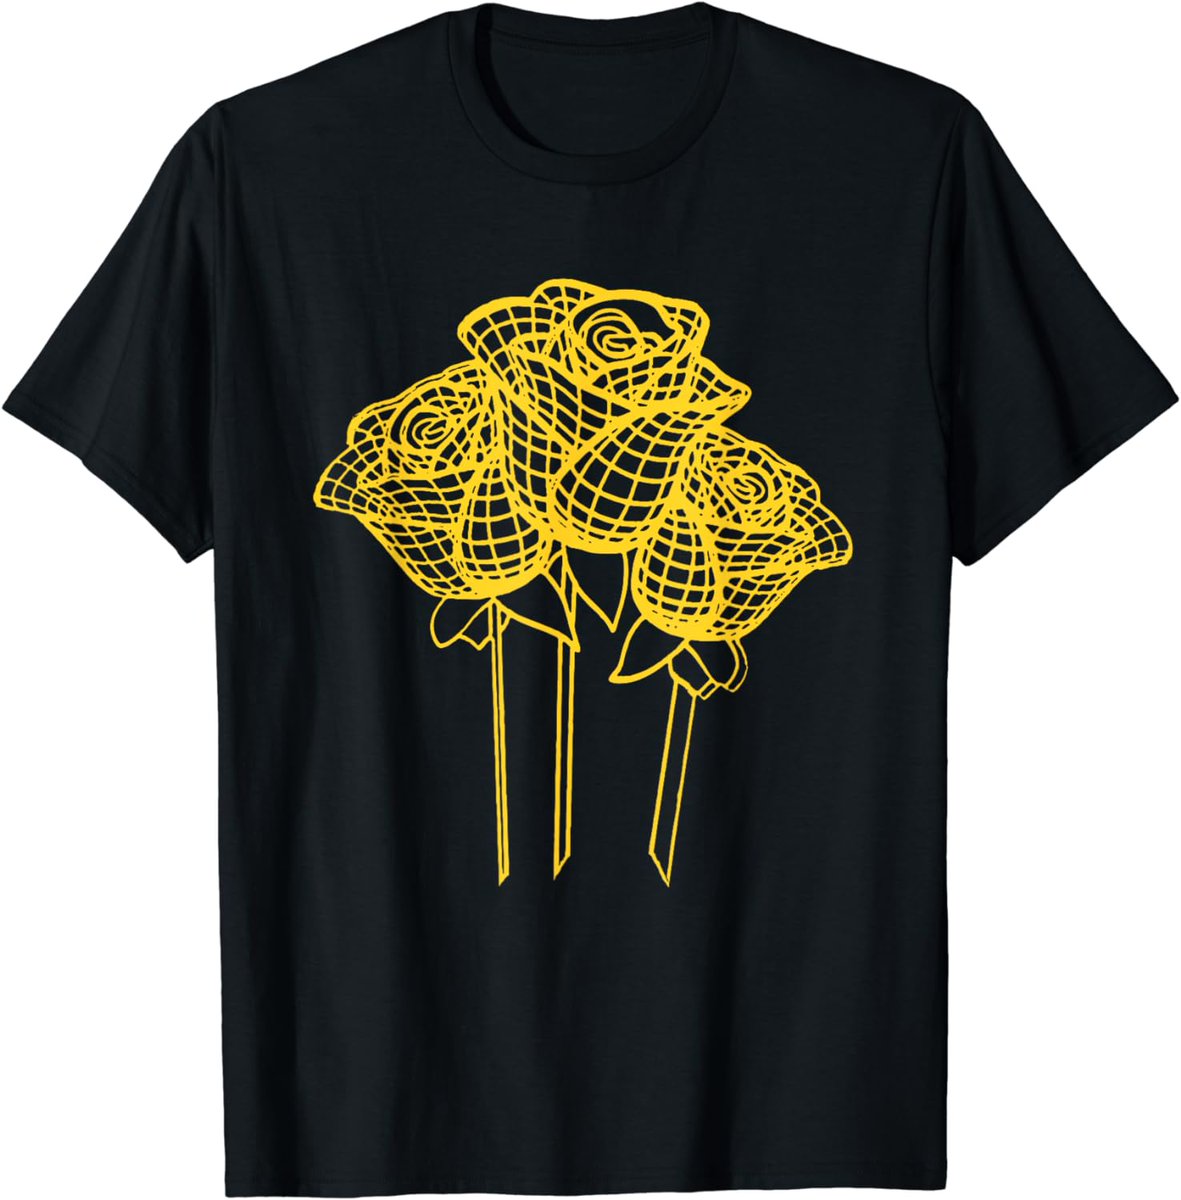 Amazon.com: Artistic Yellow Roses Geometric Line Drawing #TShirt #taiche #yellowrose #rose #flowers #roses #yellow #yellowroses #nature #flower #yellowflowers #flowersofx #photography #love #flowerphotography #garden #rosegarden amazon.com/dp/B09MPJR88M